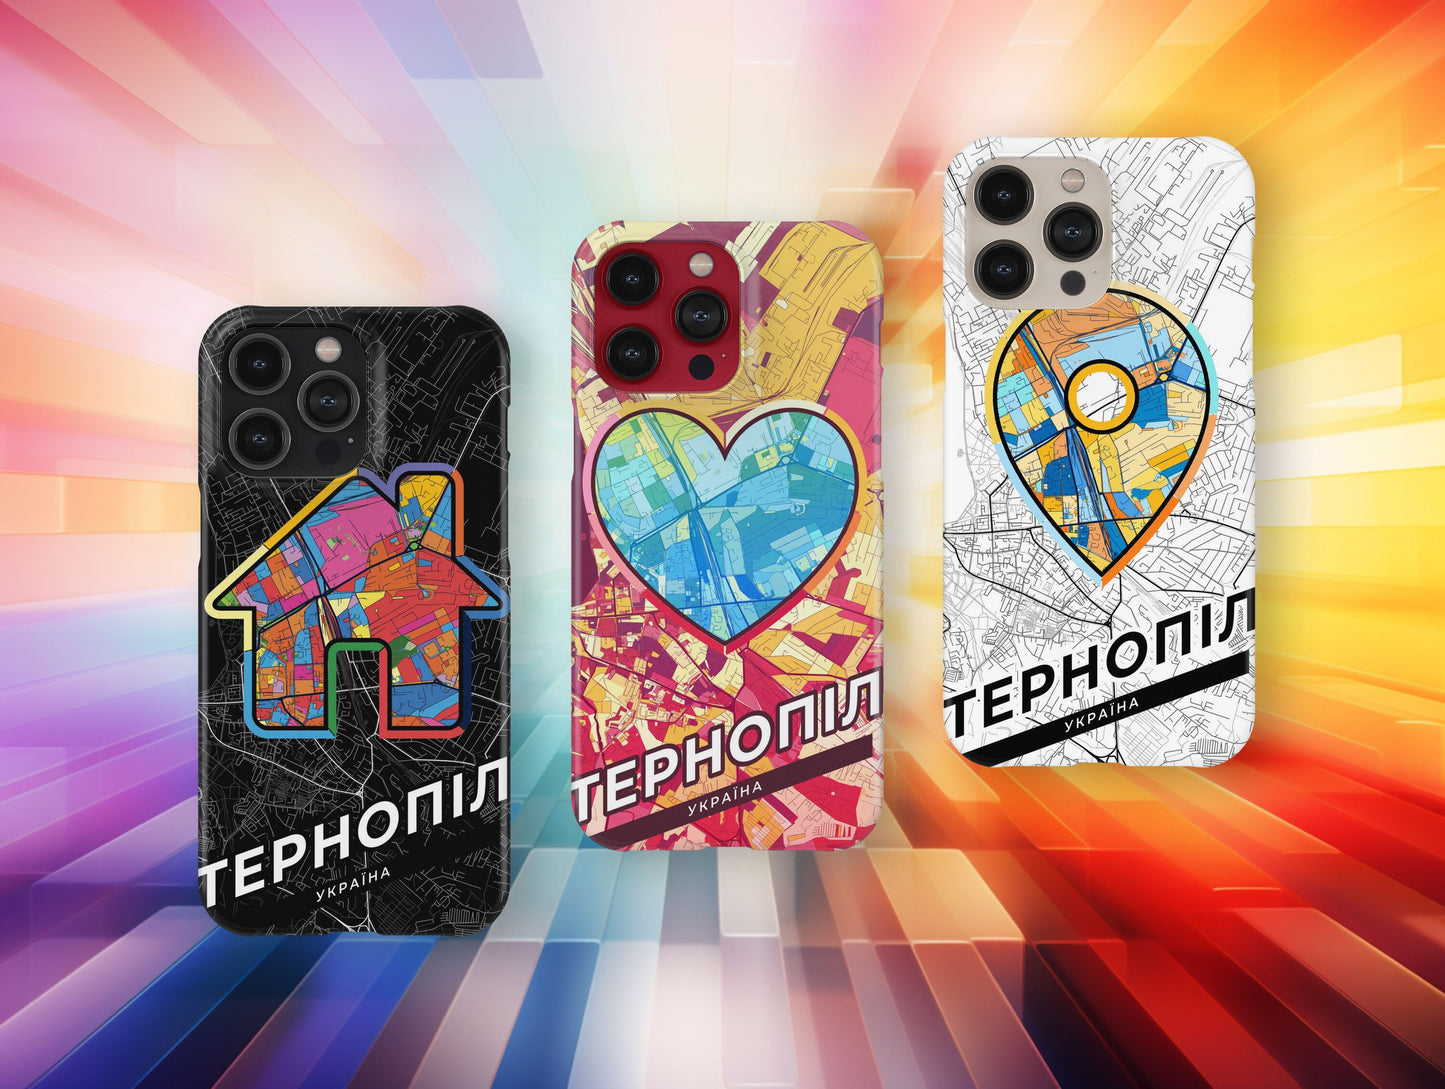 Ternopil Ukraine slim phone case with colorful icon